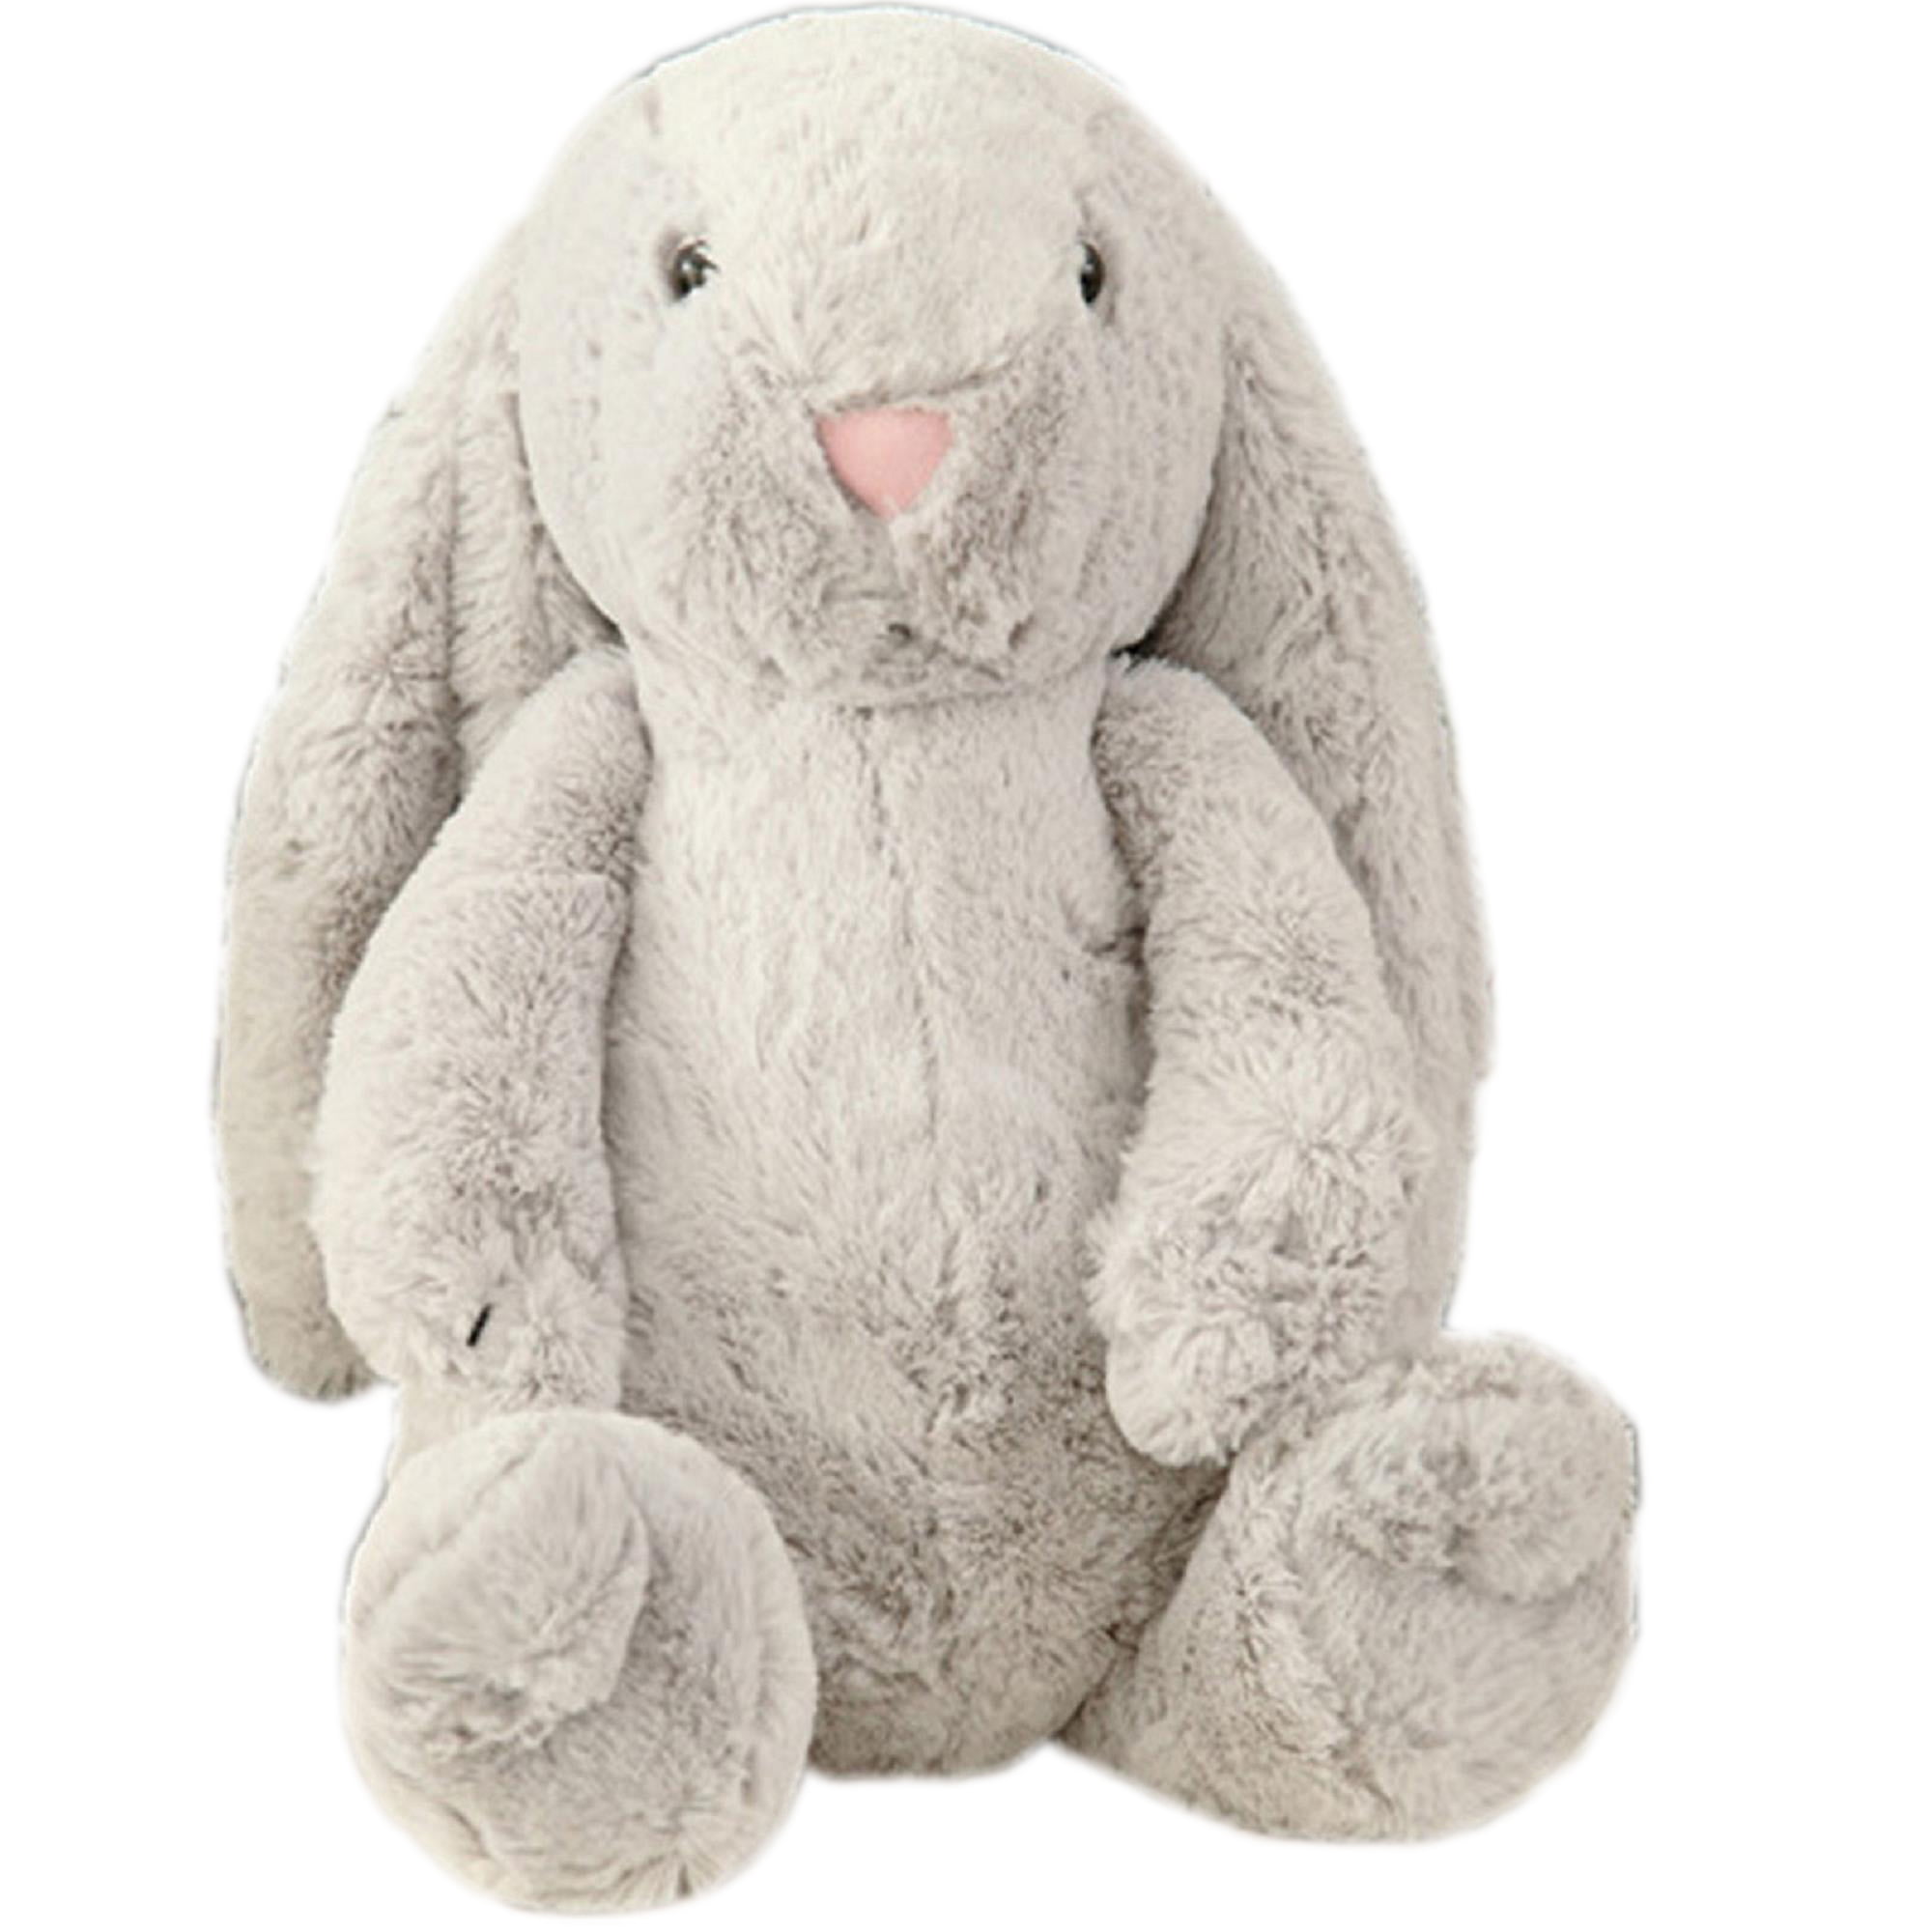 Cute Bunny Soft Plush Toy Rabbit Stuffed Animal Baby Kids Plush Doll Easter Gift 